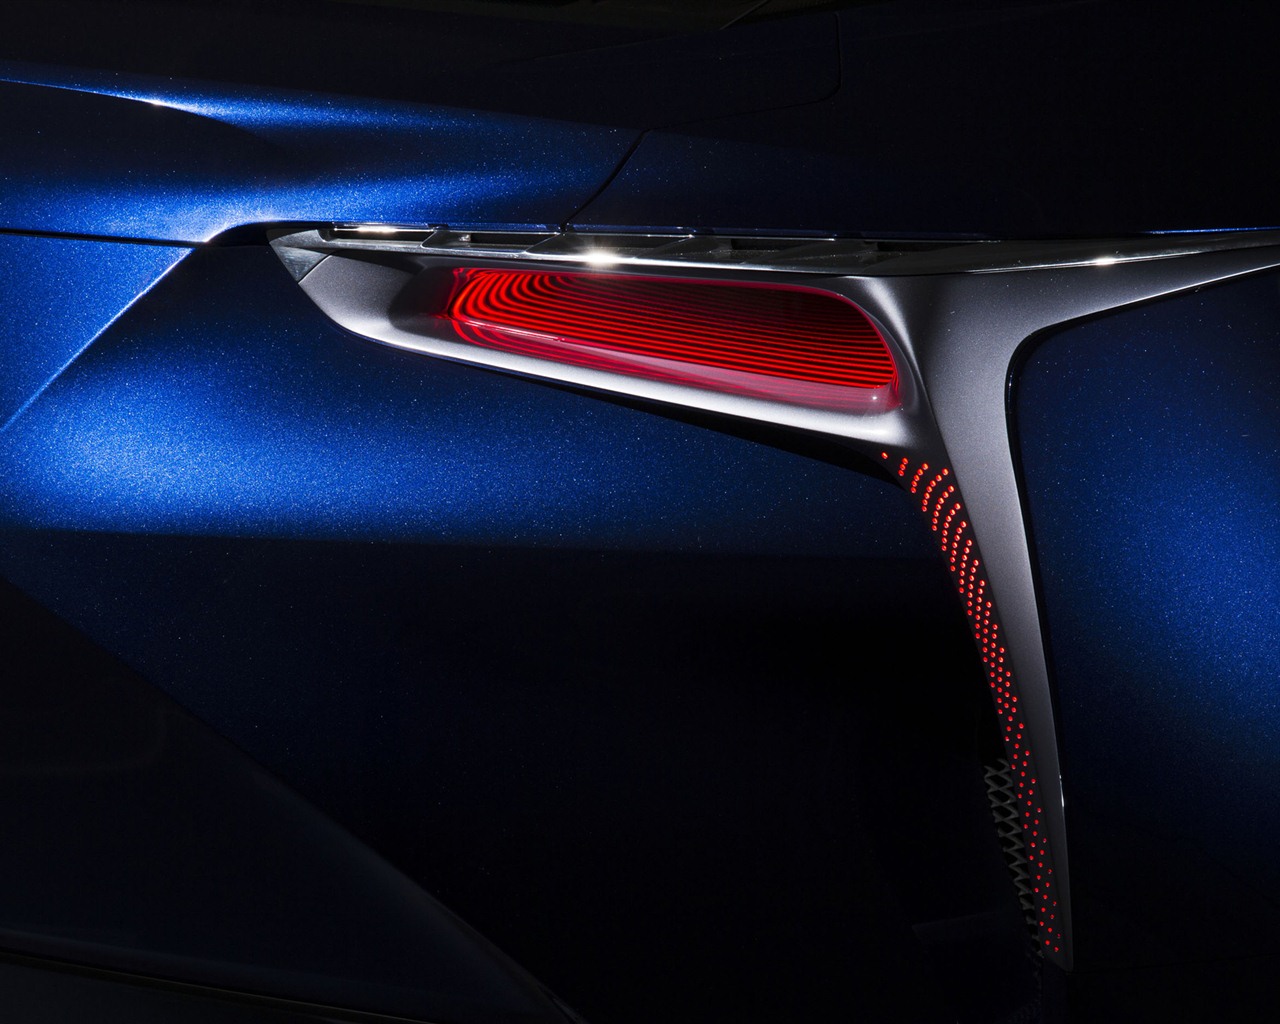 2012 Lexus LF-LC Blue concept 雷克萨斯 蓝色概念车 高清壁纸13 - 1280x1024